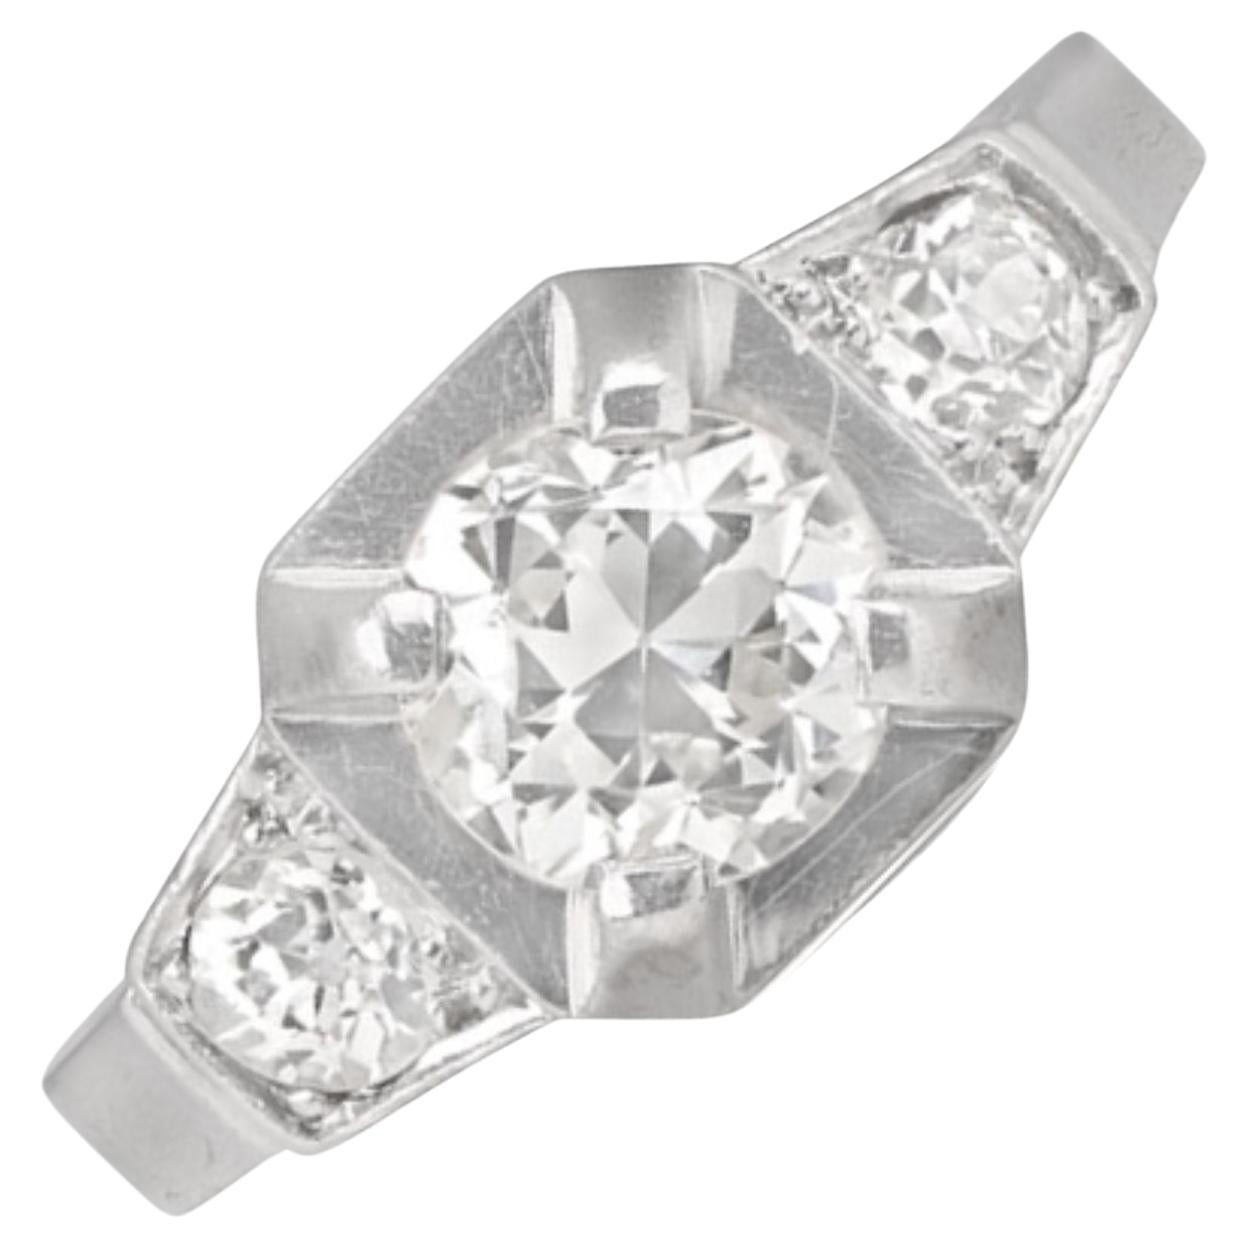 Vintage 0.85ct Old European Cut Diamond Engagement Ring, VS1 Clarity, Platinum